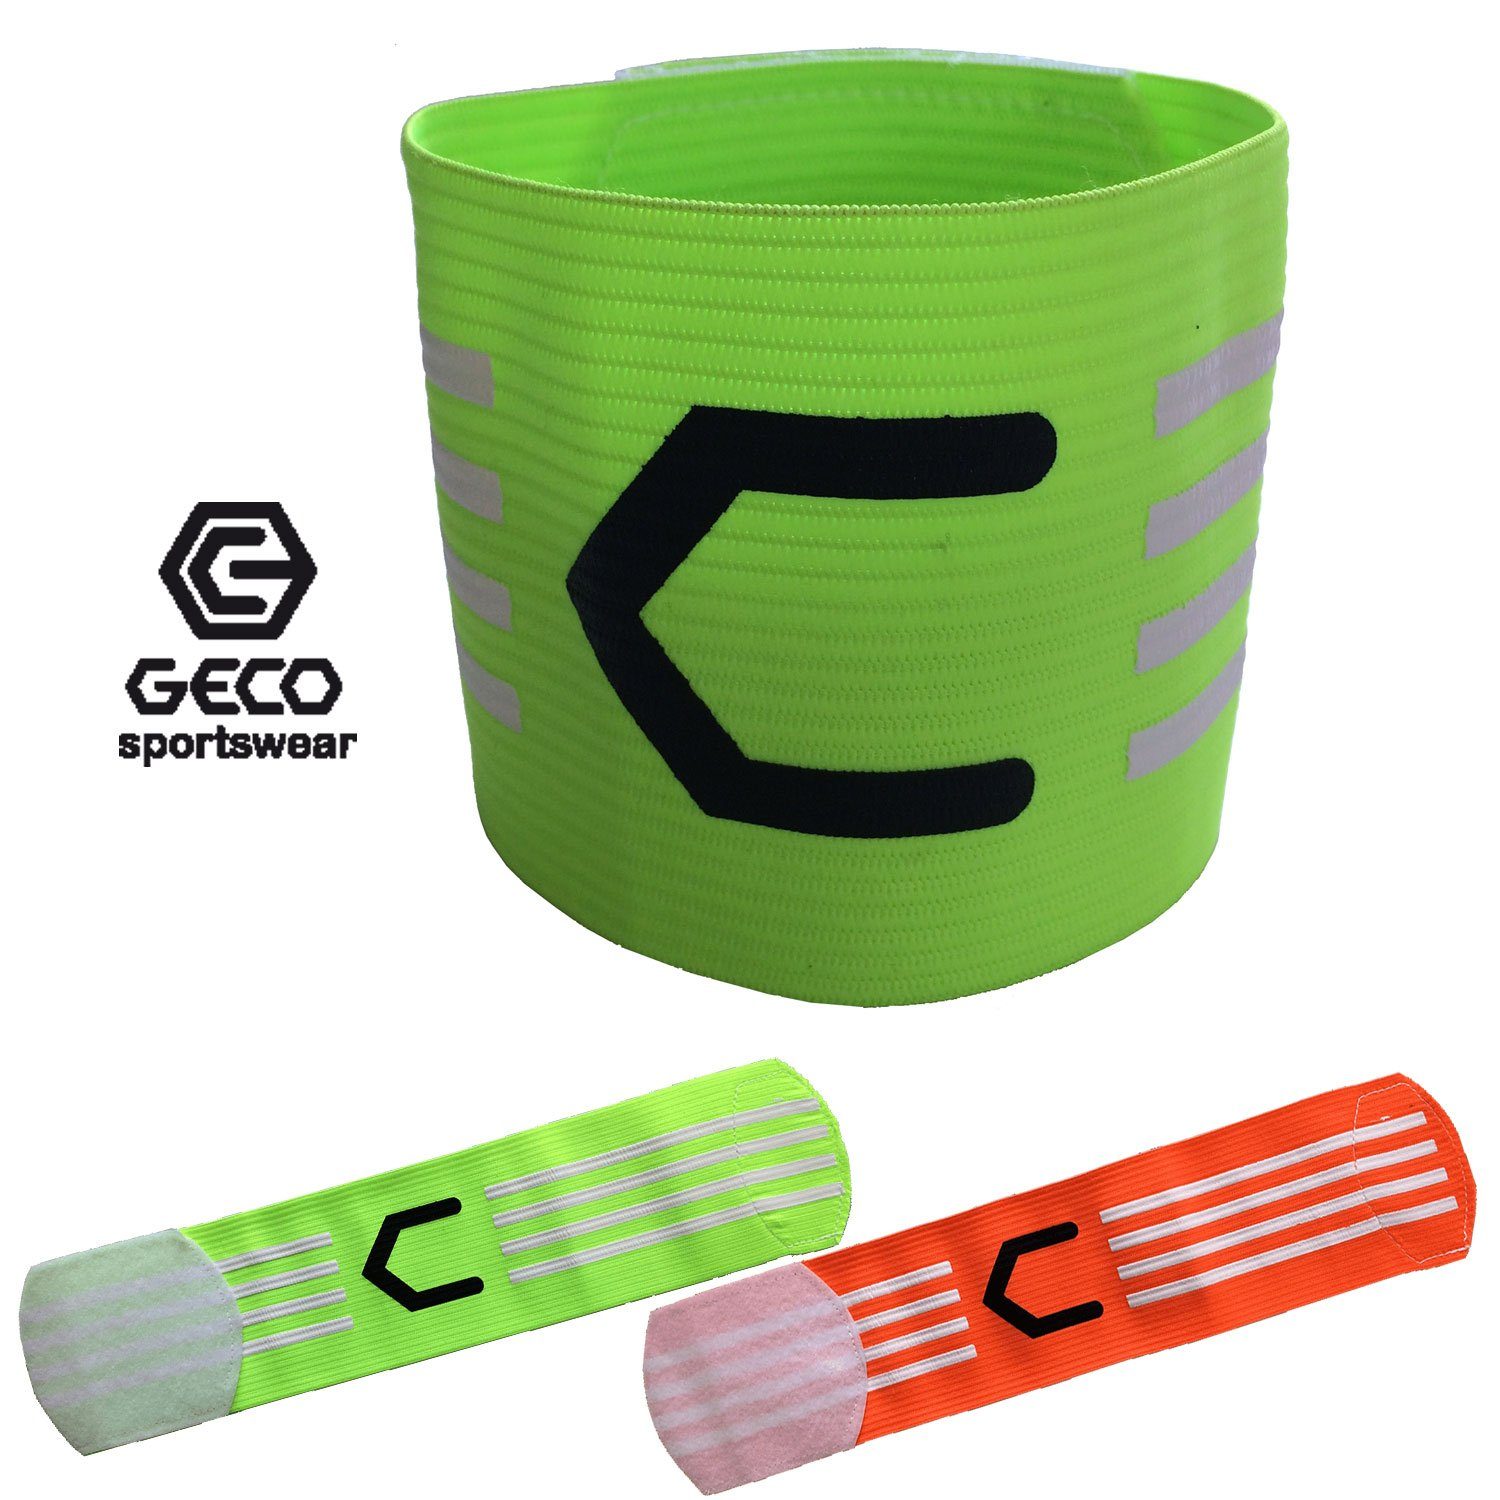 Kapitänsbinde Farben NEON Geco Sportswear grün und Fußball orange, grün Geco Kapitänsbinde oder orange neon